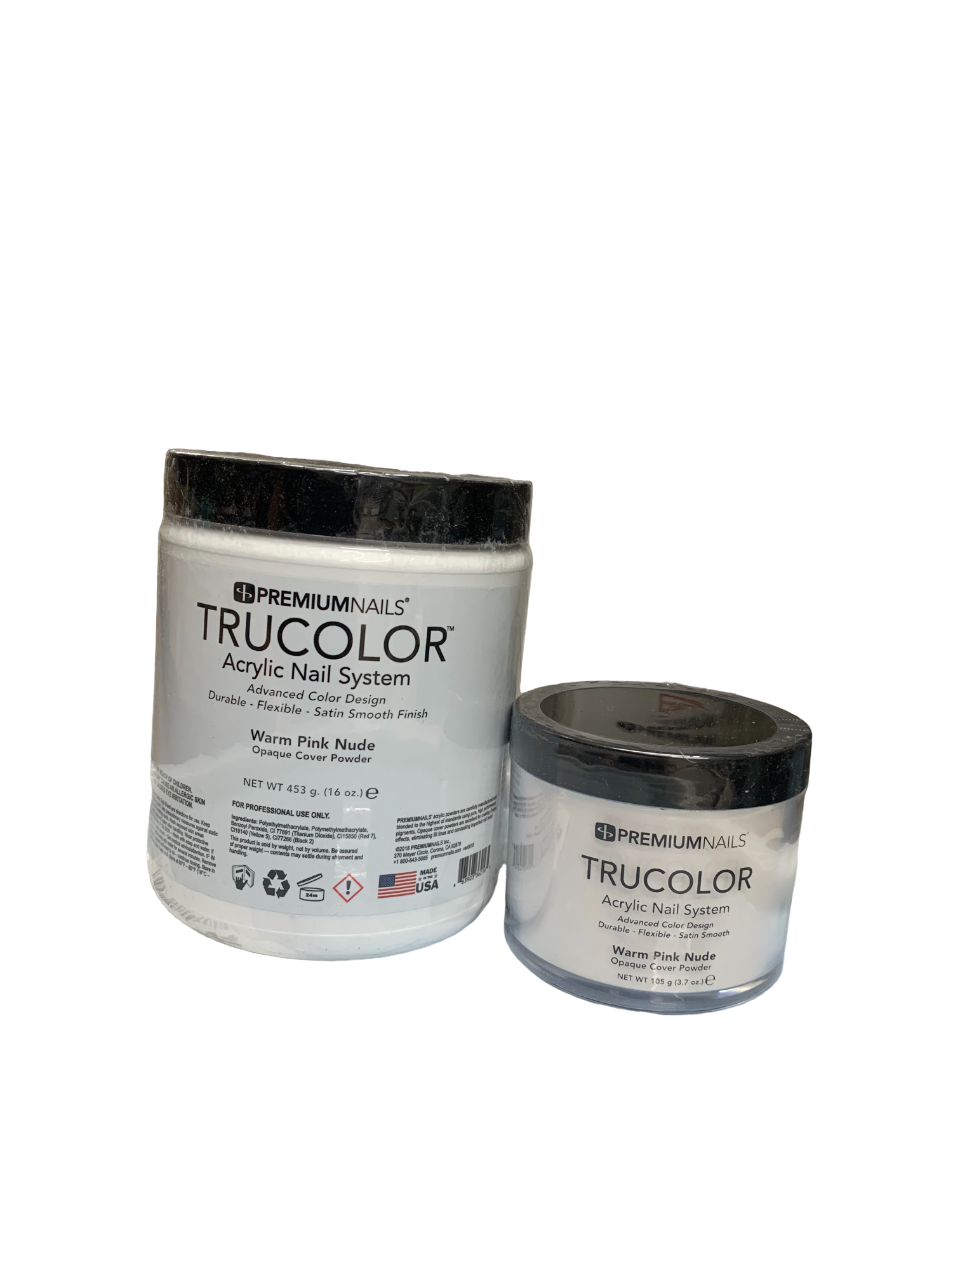 Premiumnails Trucolor Acrylic Powder - TCWPN - Warm Pink Nude